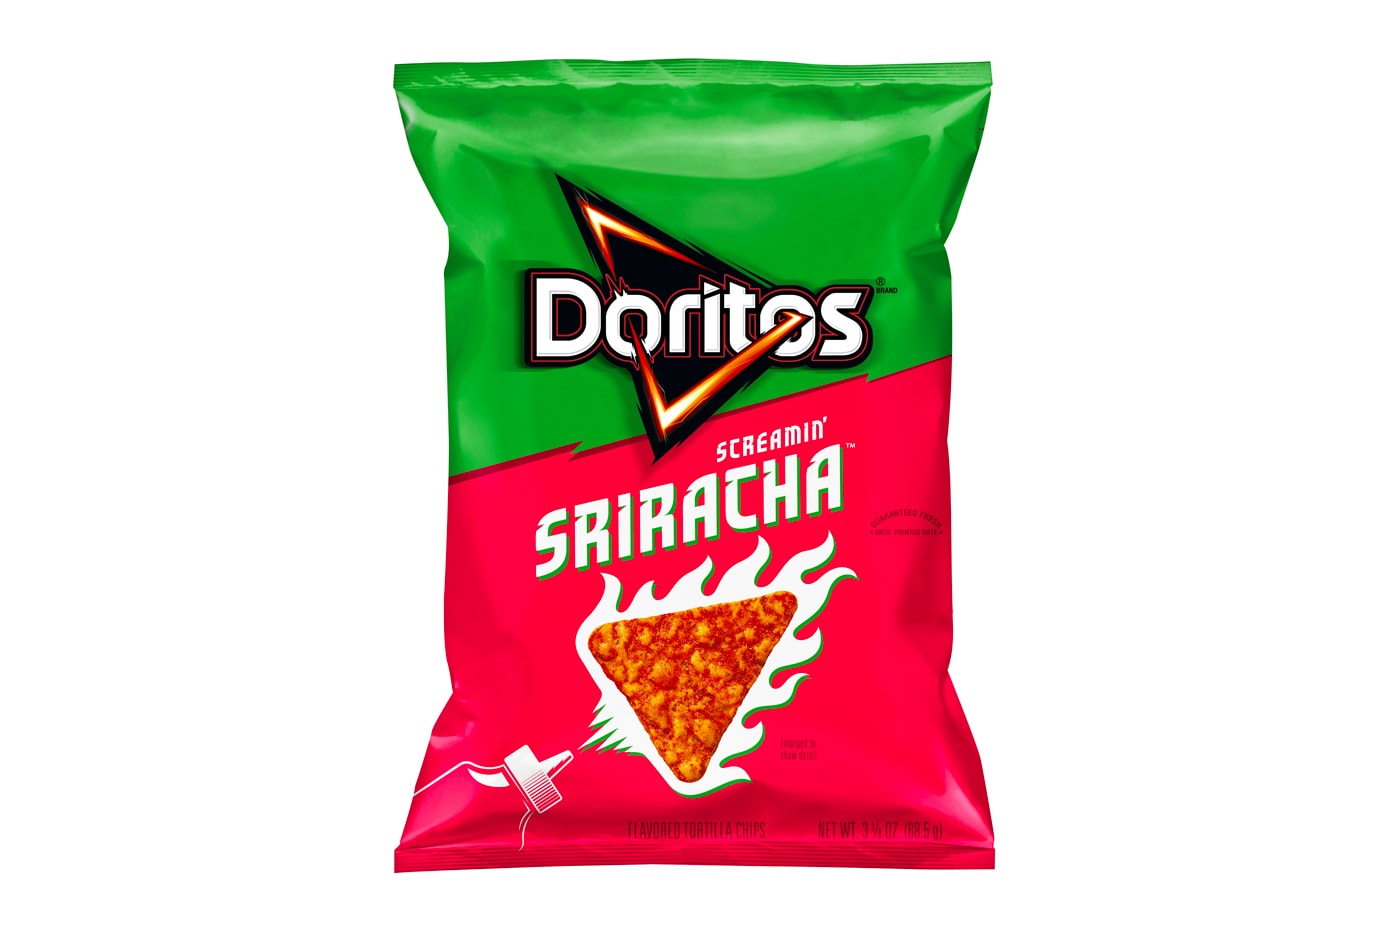 Doritos Screamin Sriracha Release Info Date Buy Frito Lay Limited Time Edition Flavor